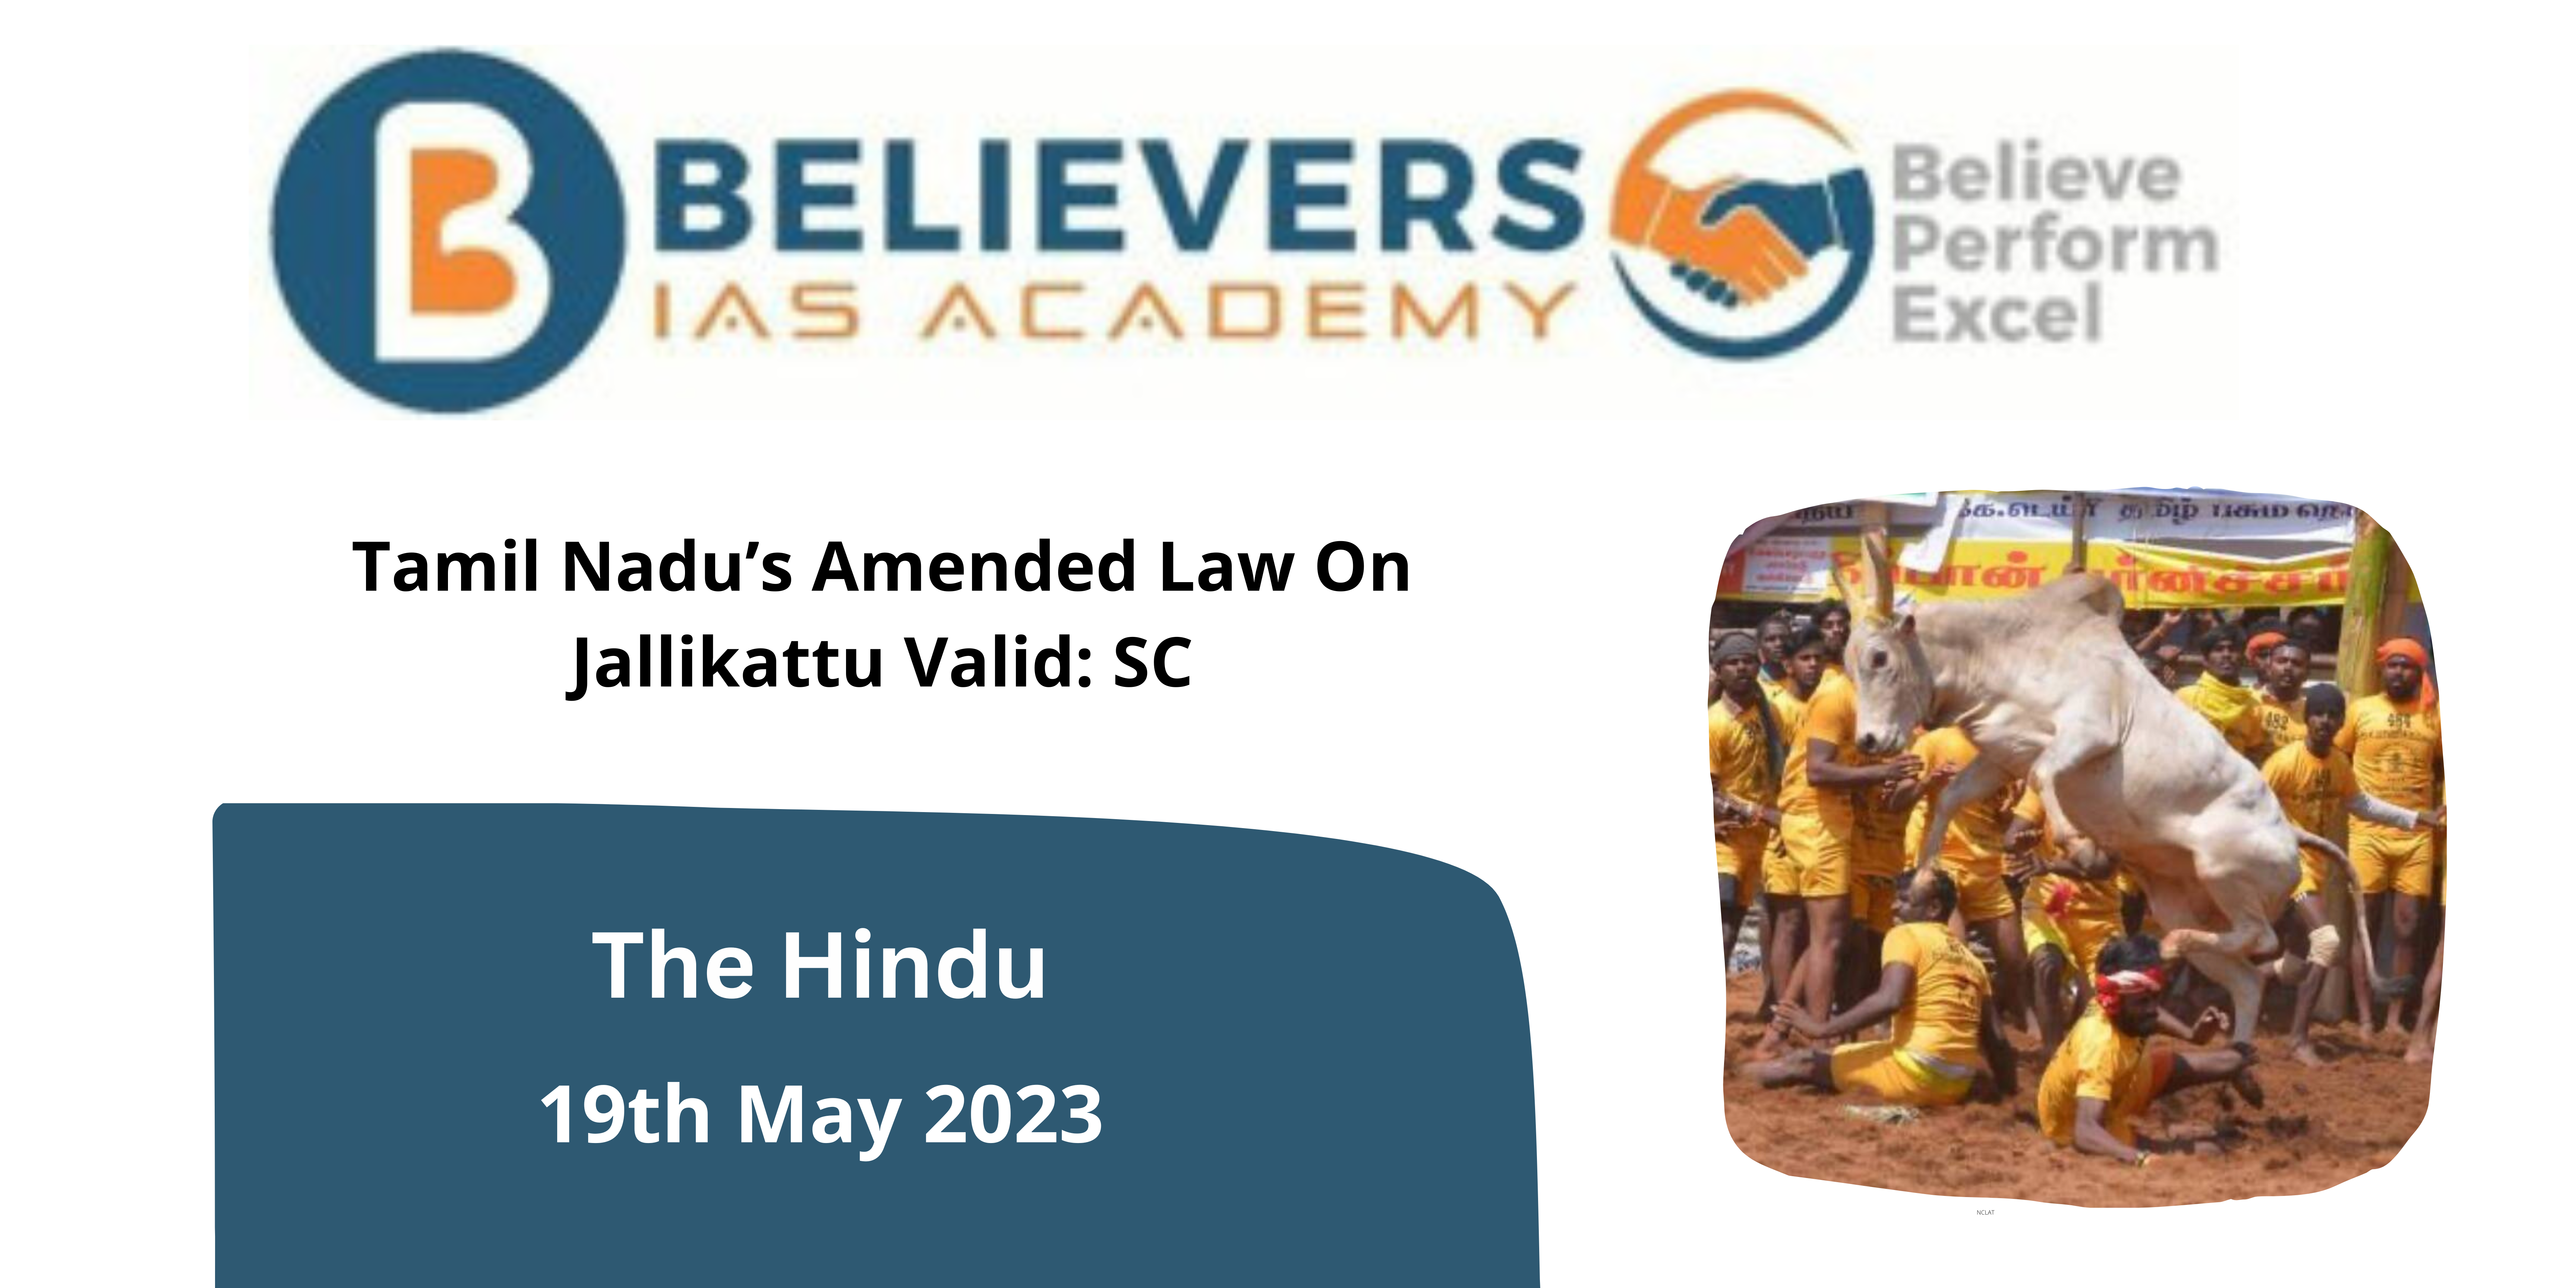 Tamil Nadu’s Amended Law On Jallikattu Valid: SC